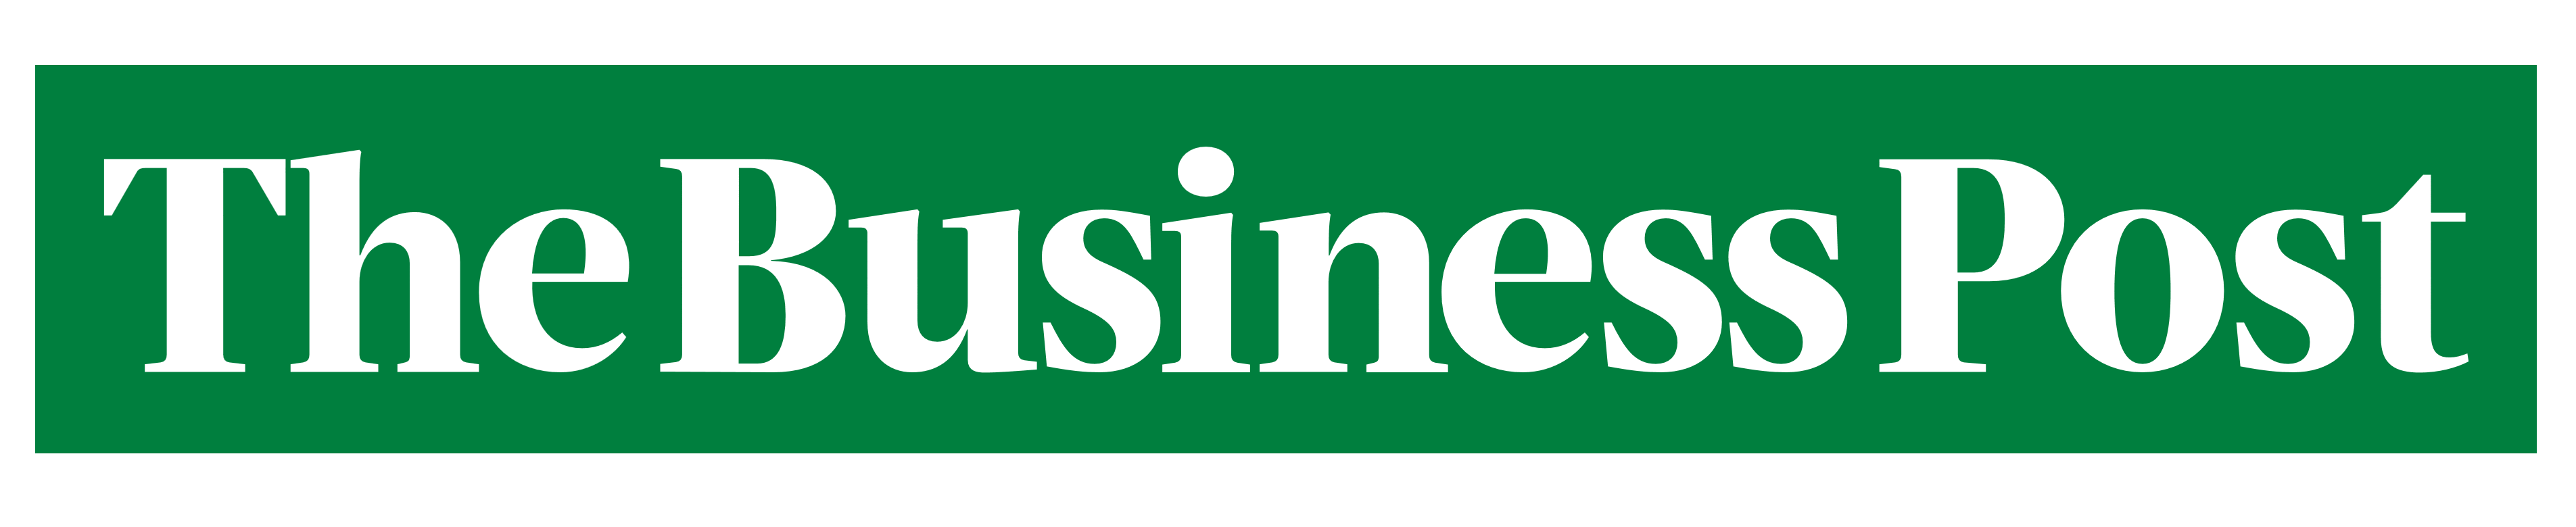 The Business Post logo, logotype